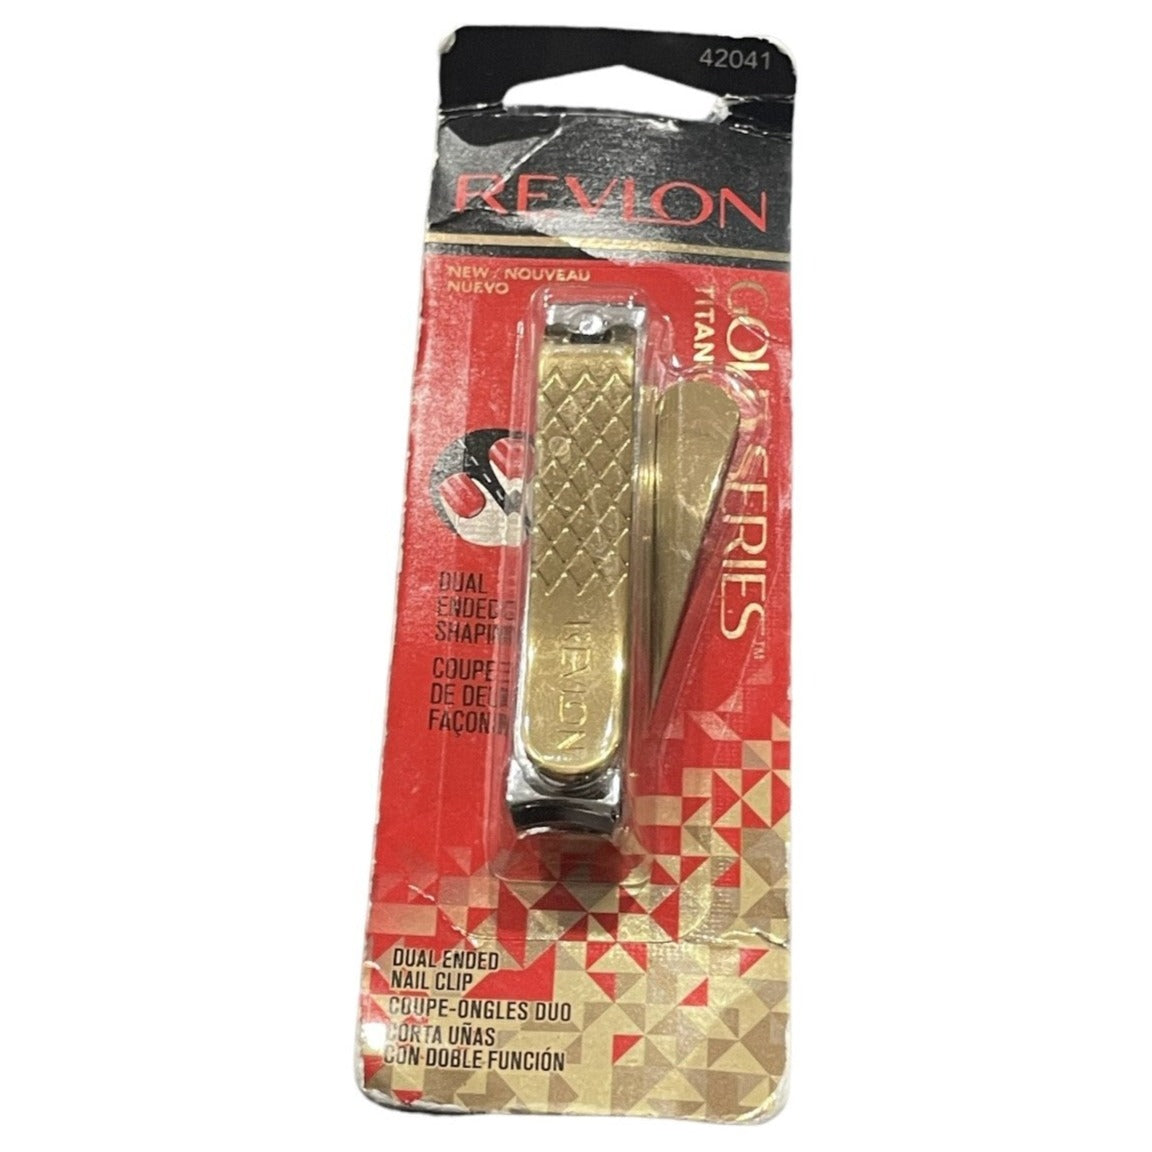 Shelf Pull Beauty Tools - Revlon Gold Series Dual Ended Nail Clip, Titanium Coated, Model 42041